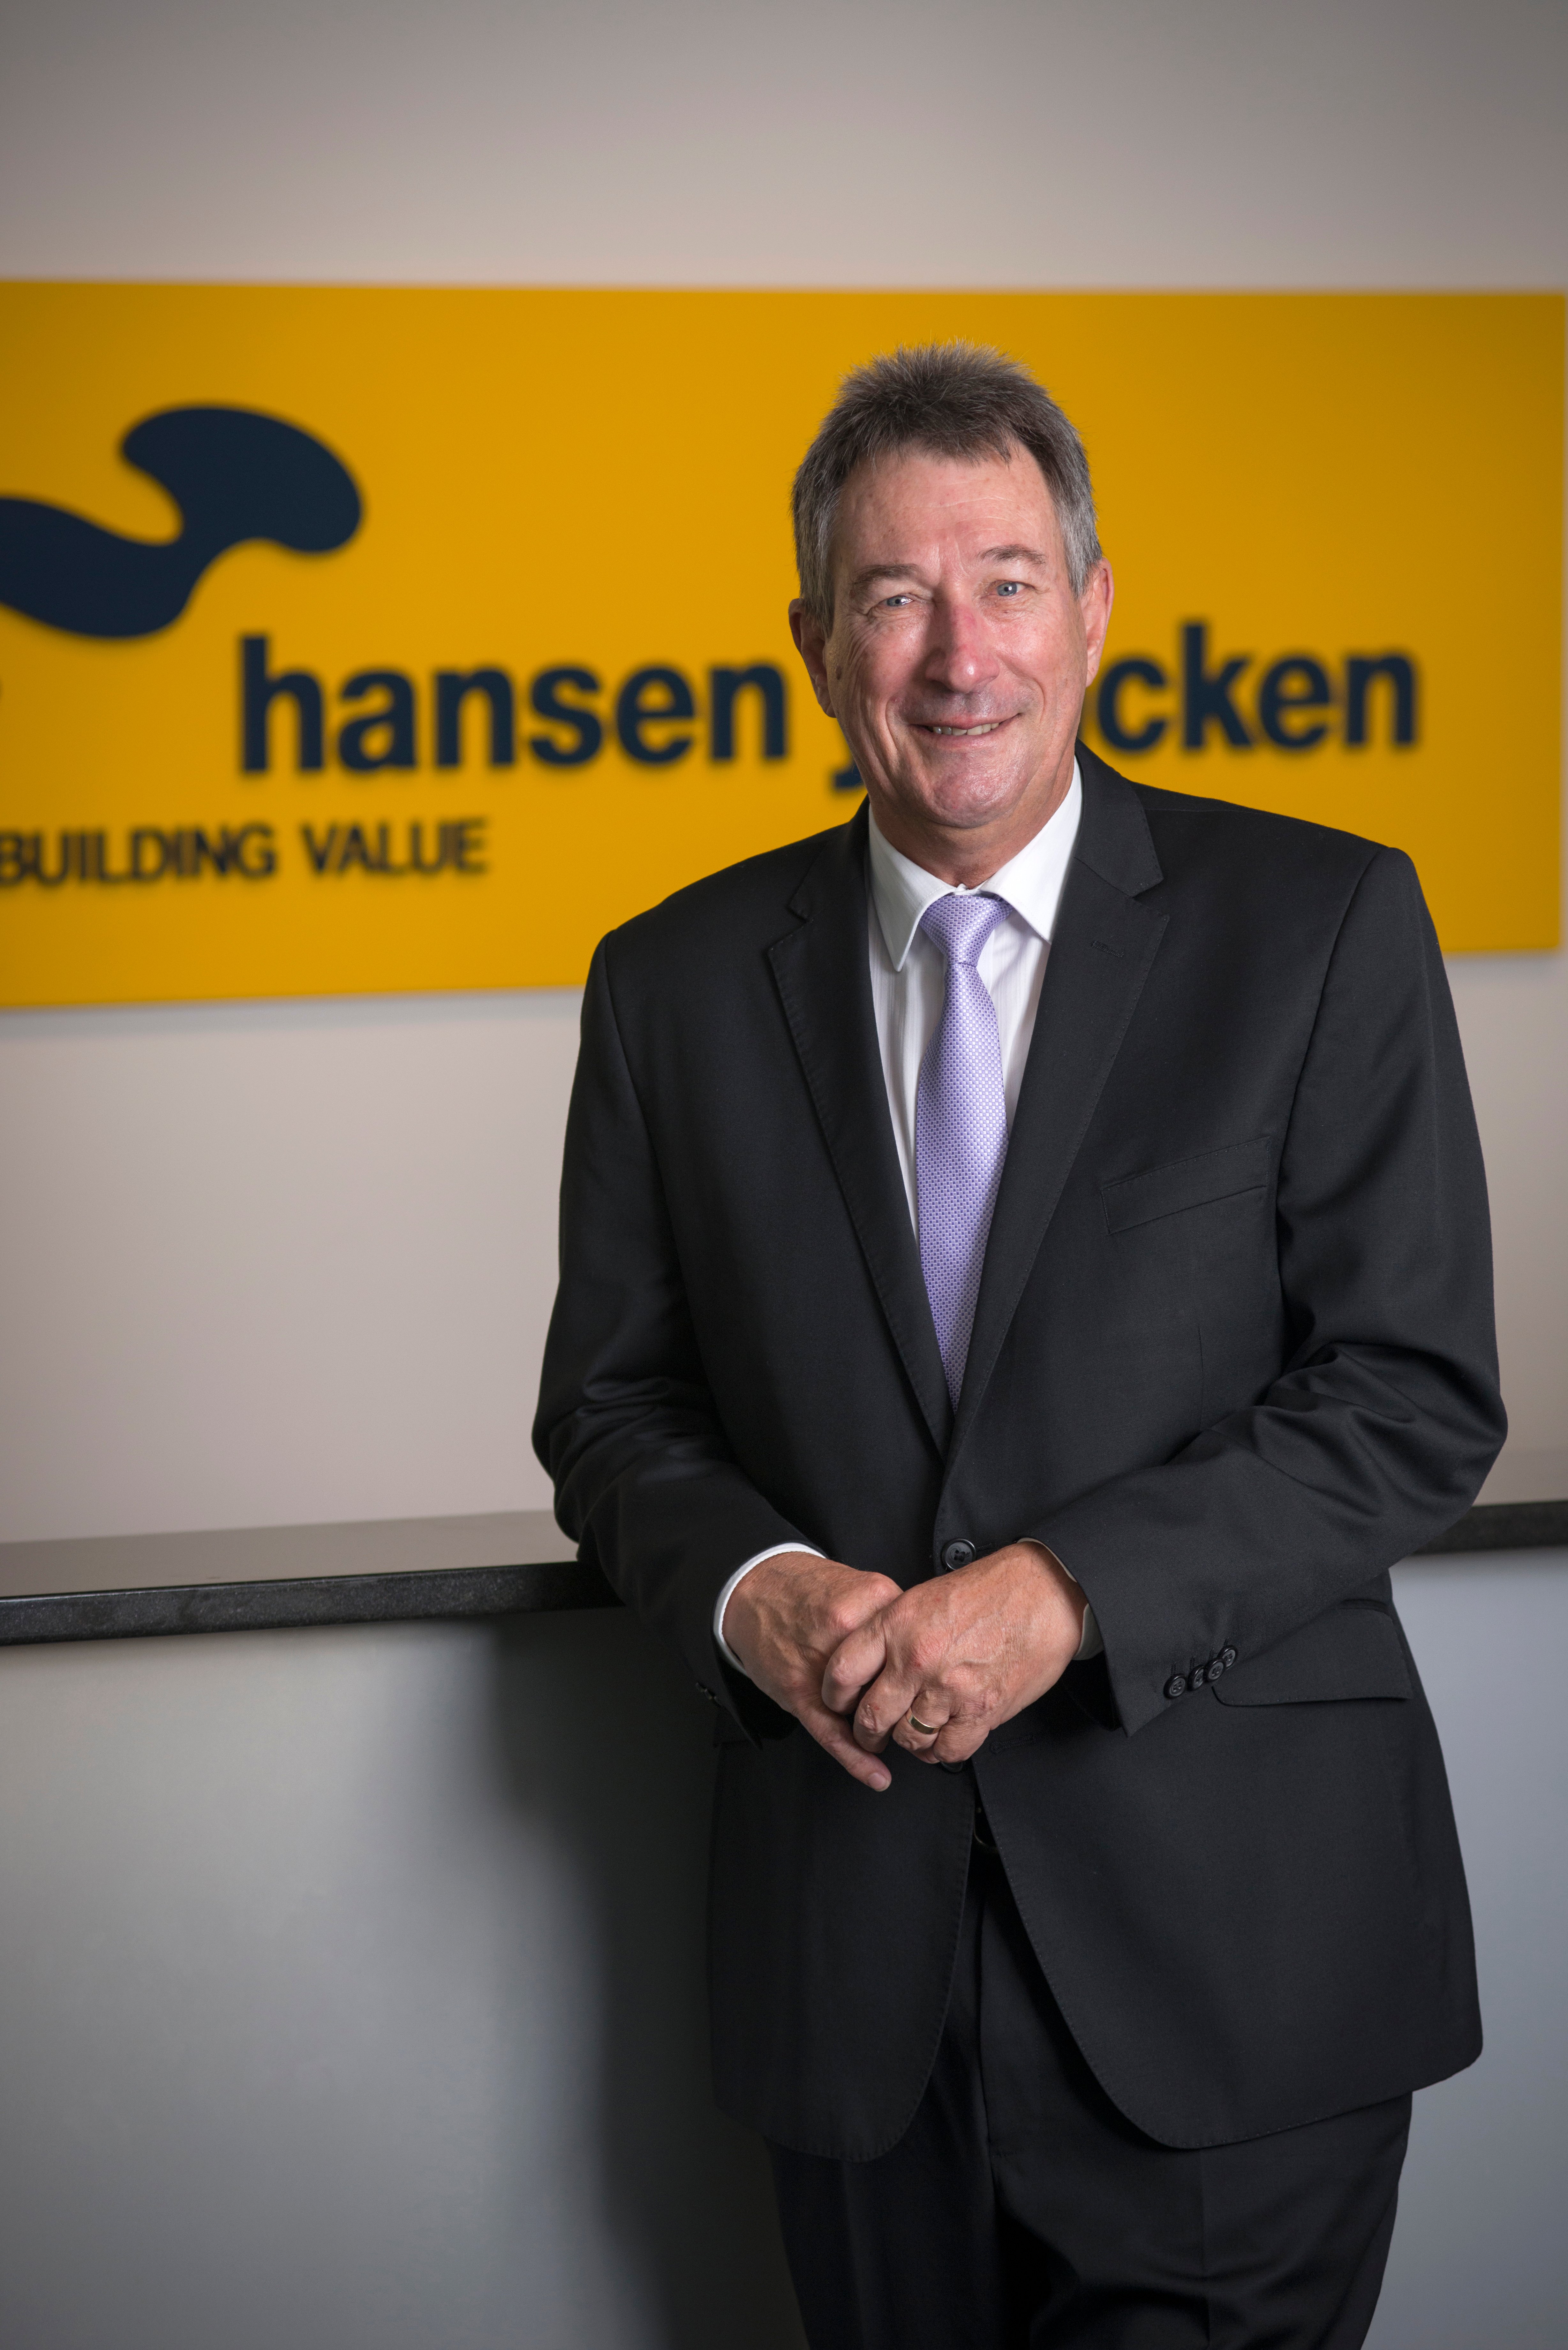 Peter Salveson, CEO	of Hansen Yuncken